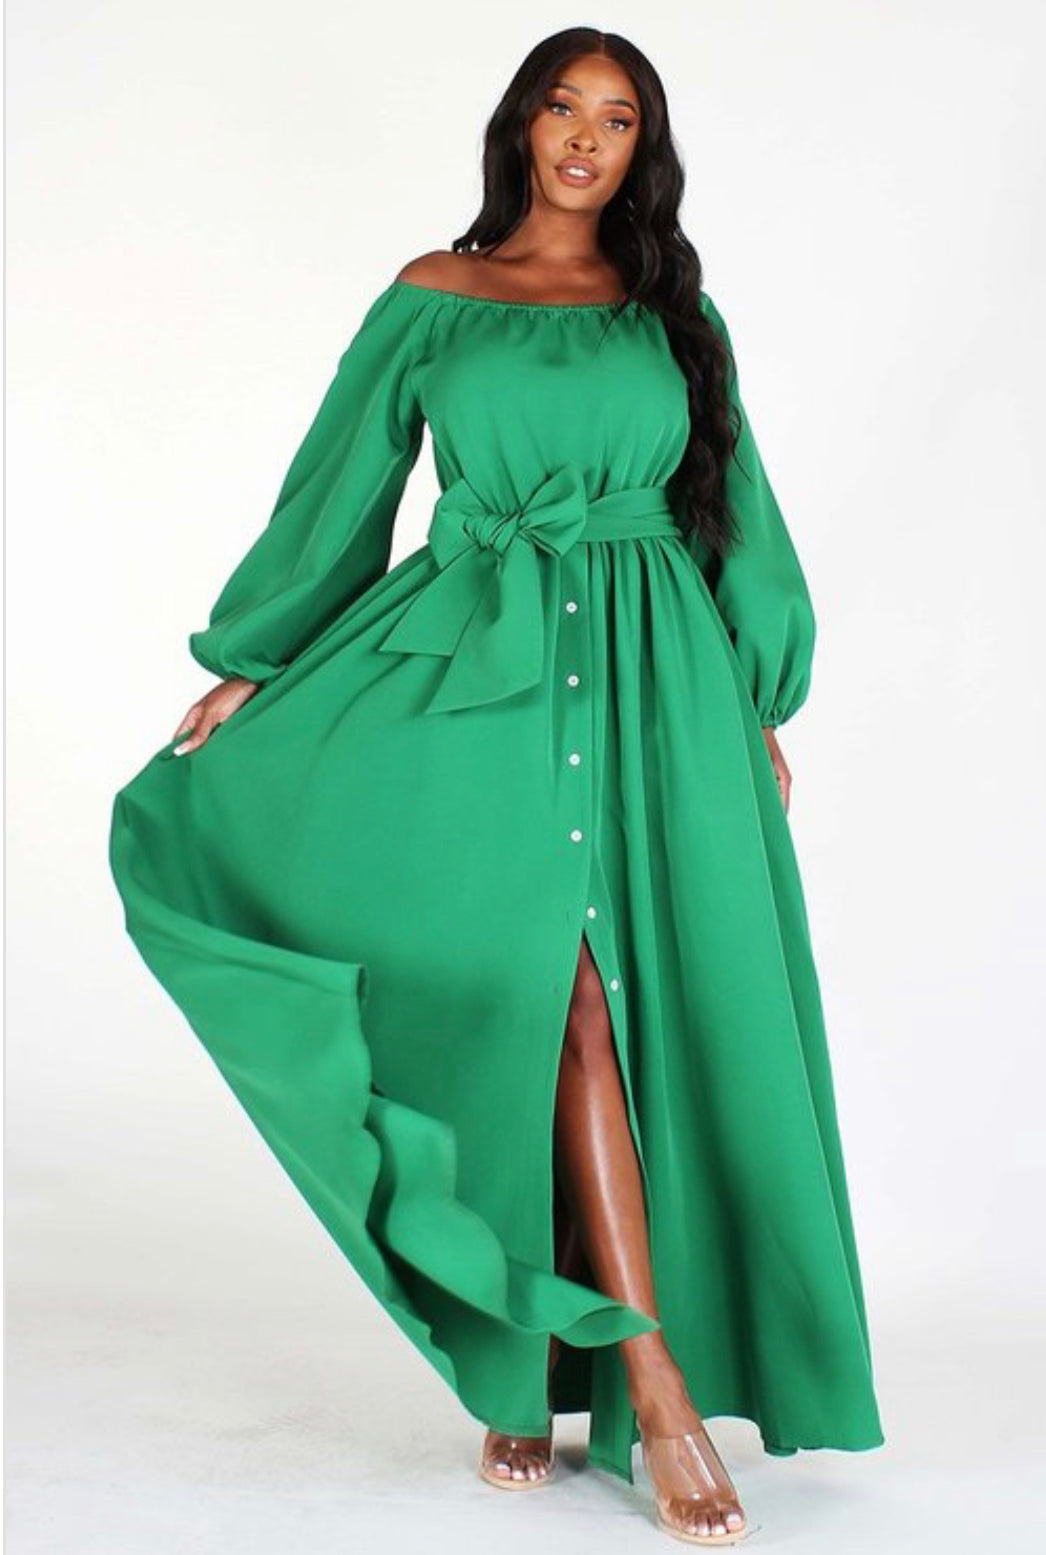 You Got This Green Maxi Dress